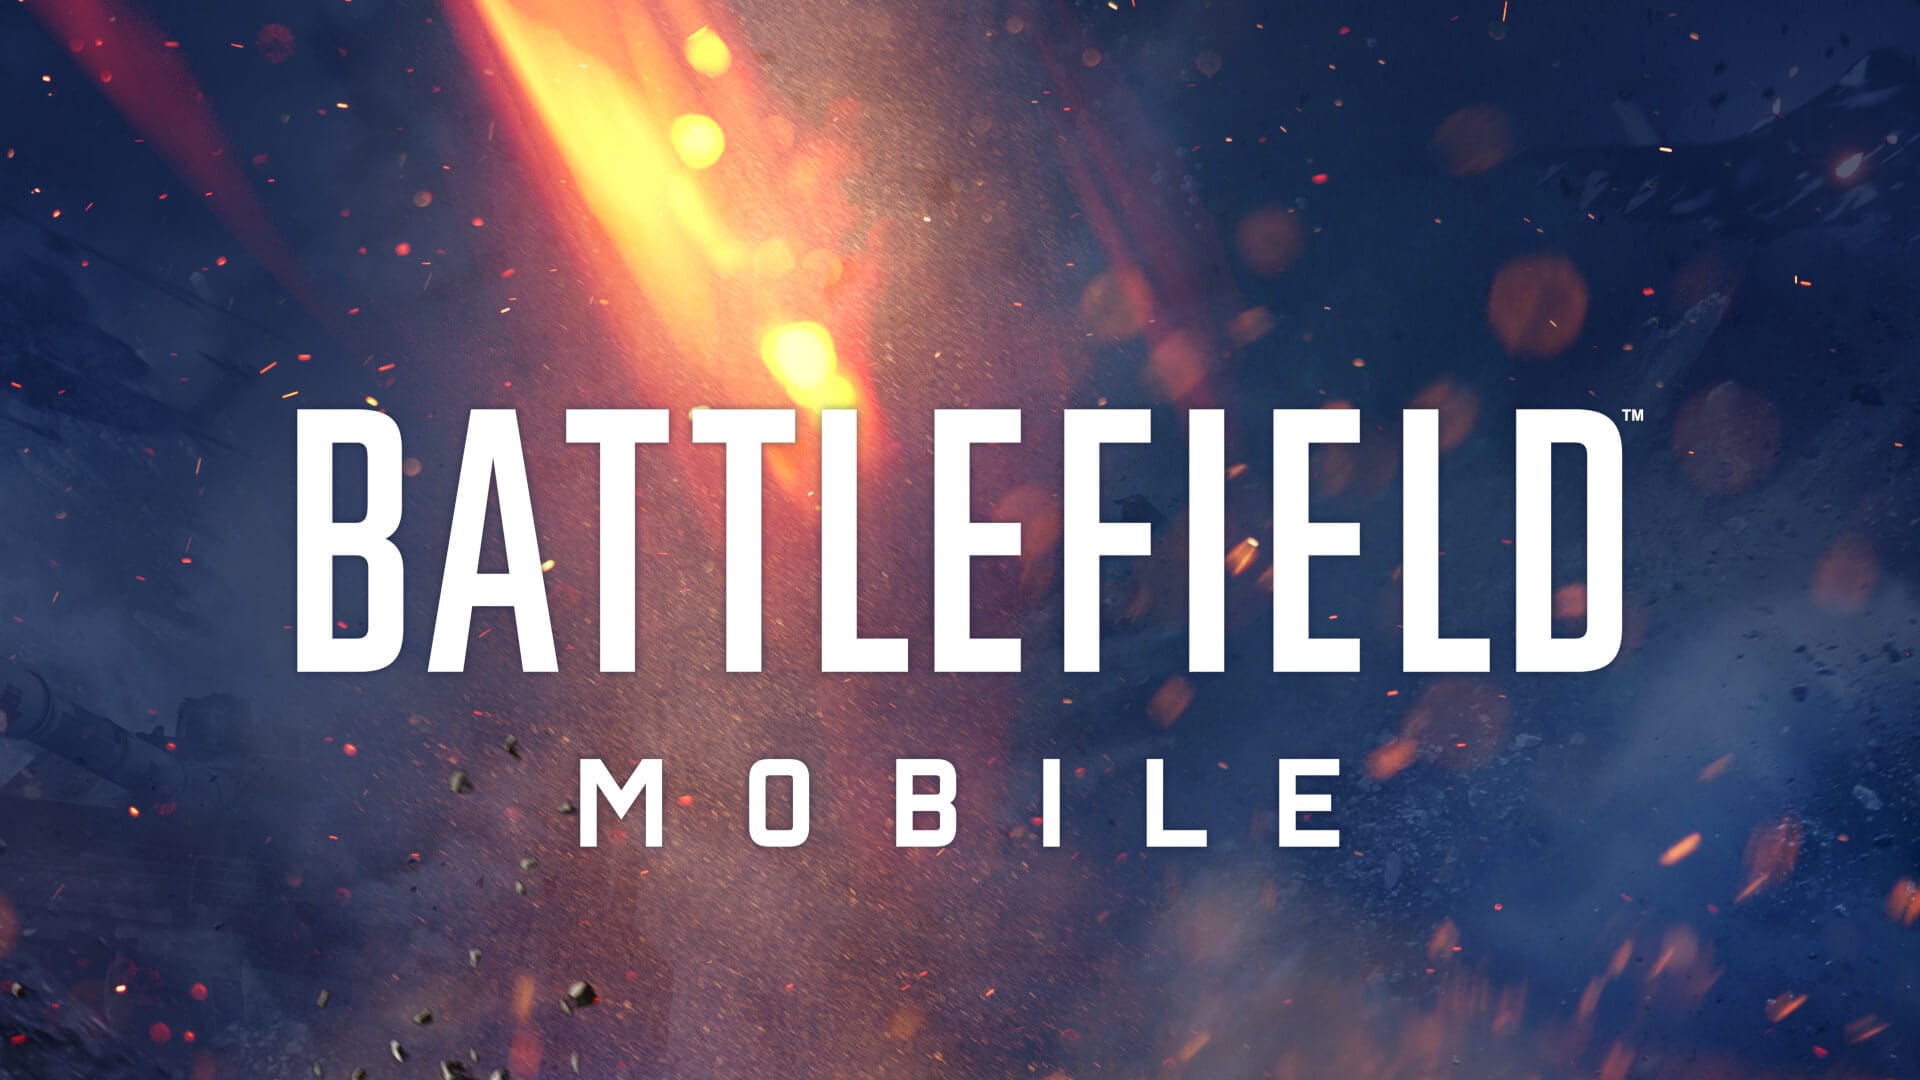 The main logo for Battlefield Mobile